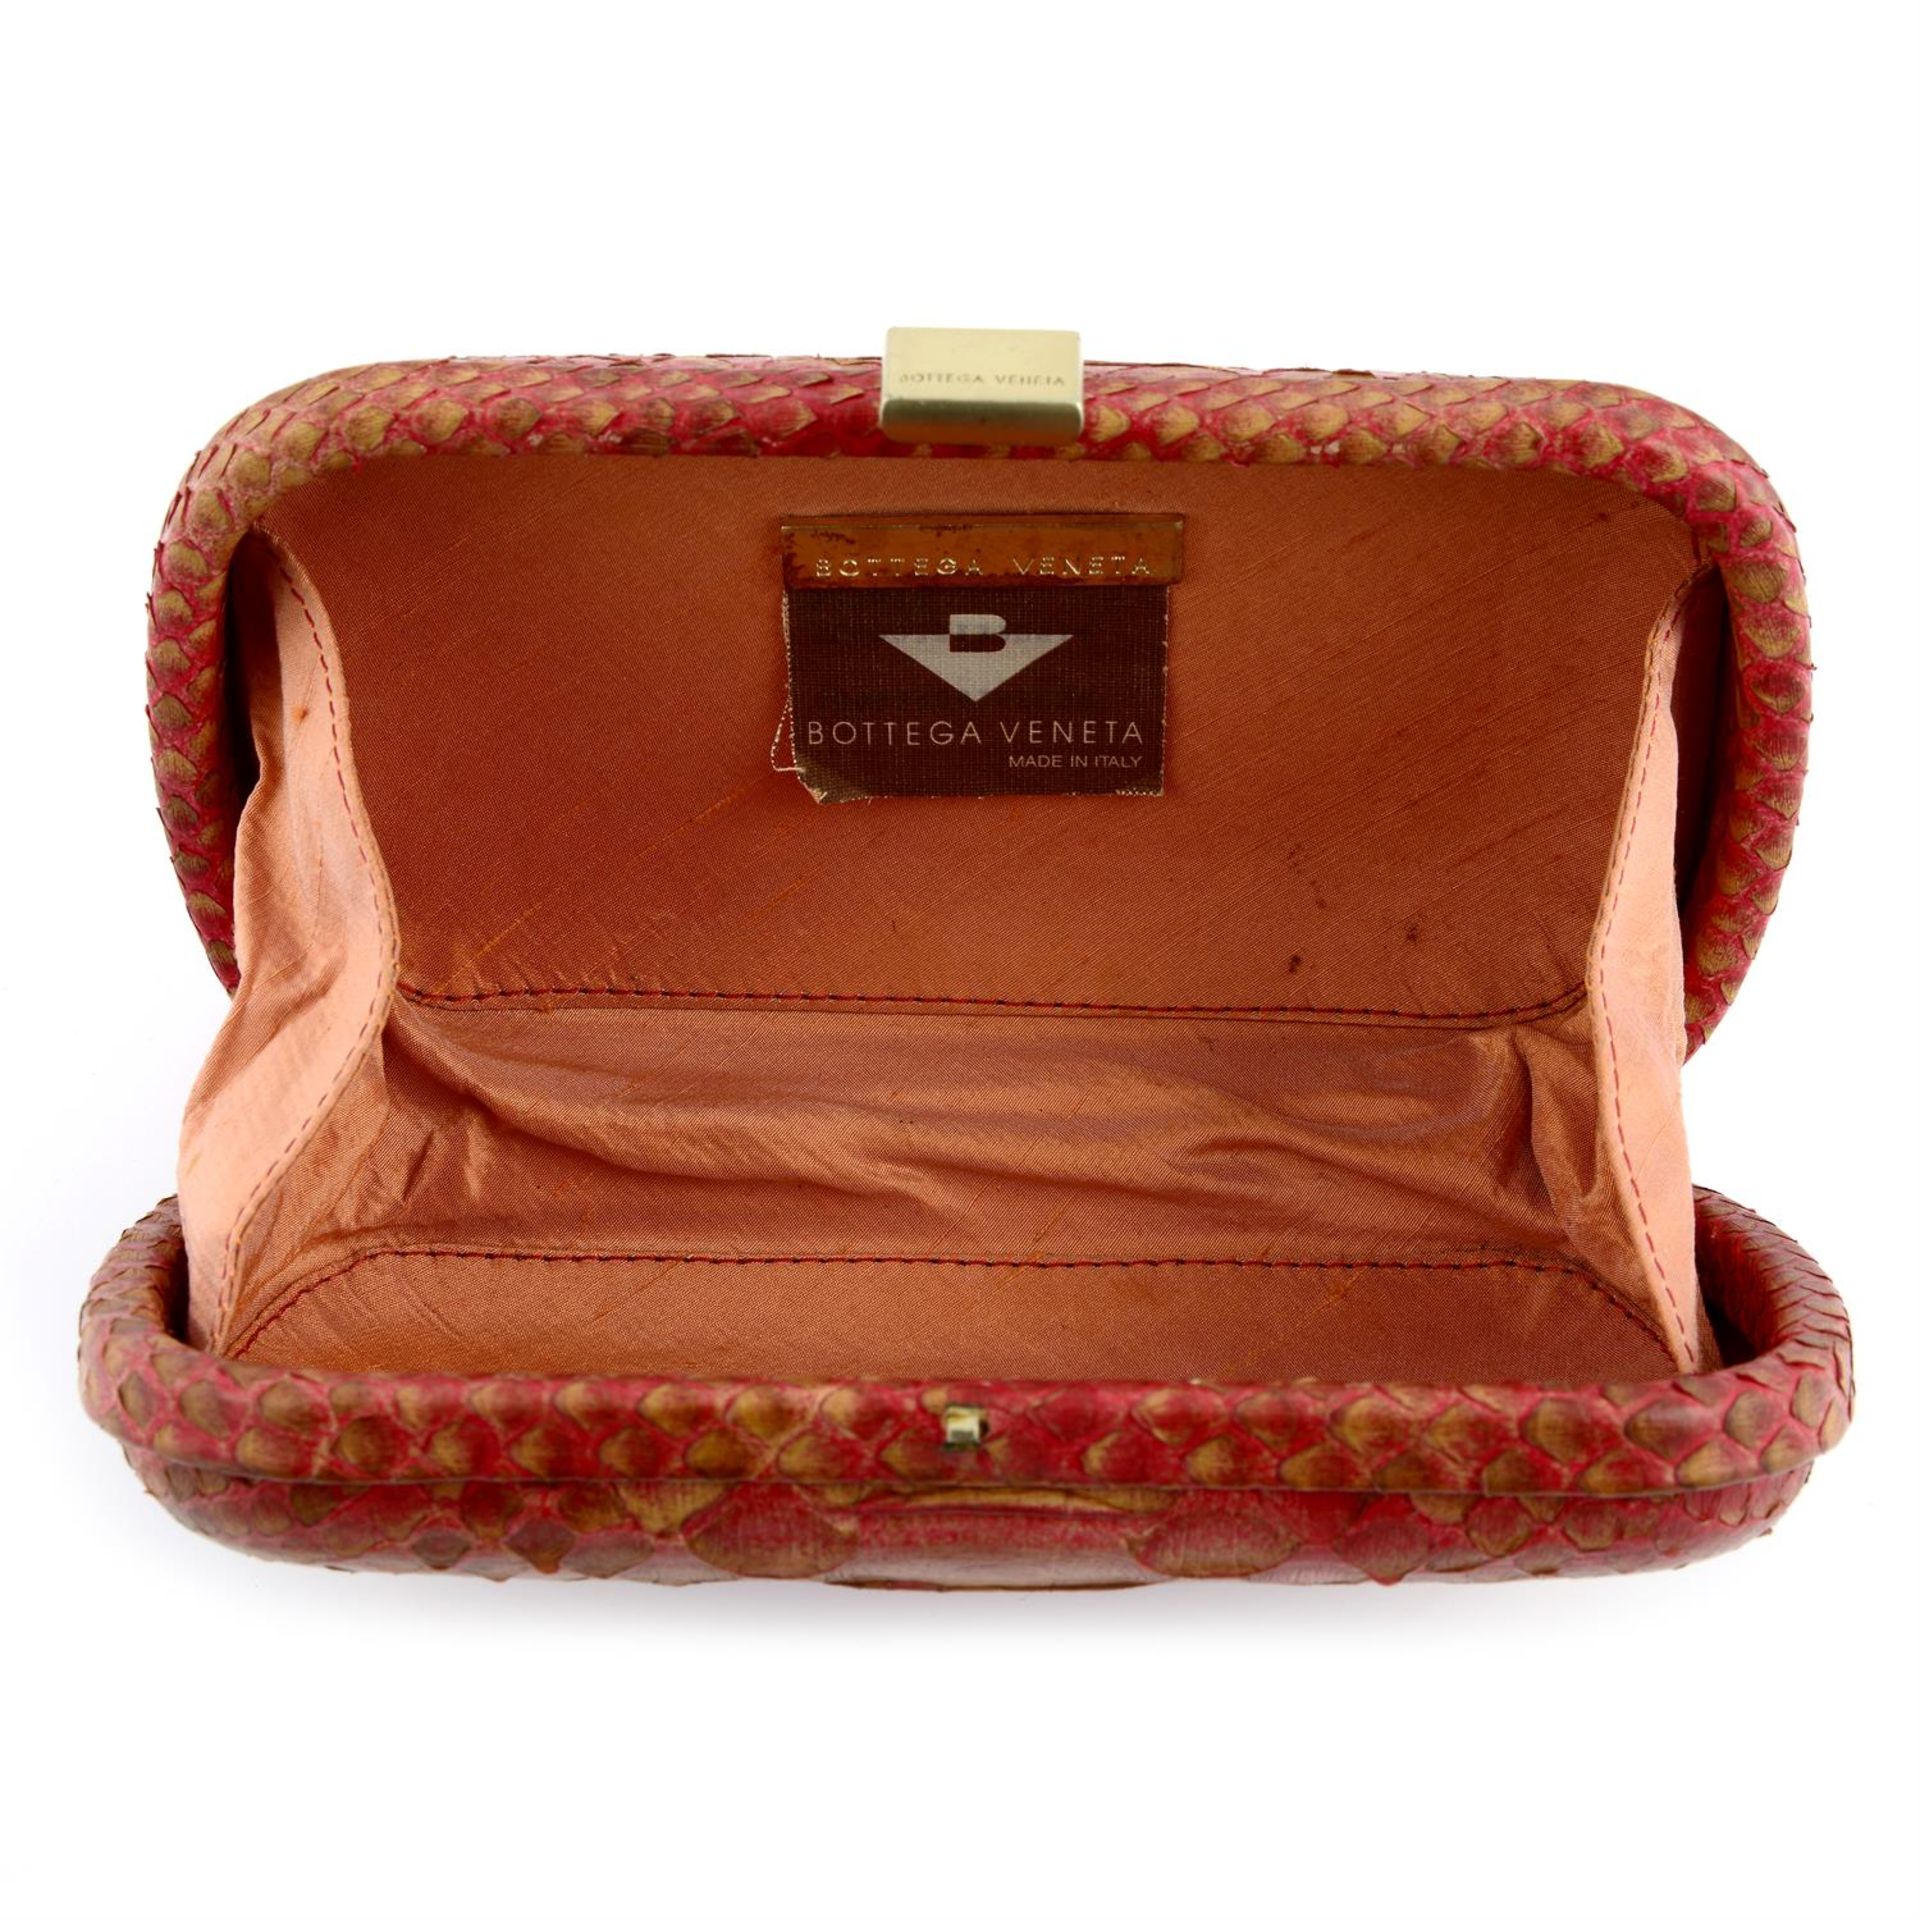 BOTTEGA VENETA - a pink snakeskin box clutch bag. - Image 3 of 3